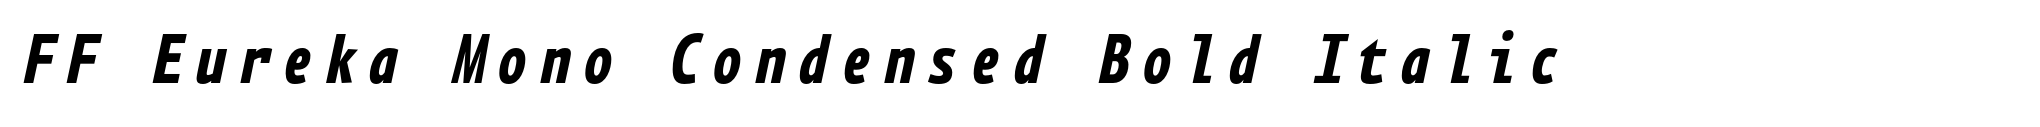 FF Eureka Mono Condensed Bold Italic image